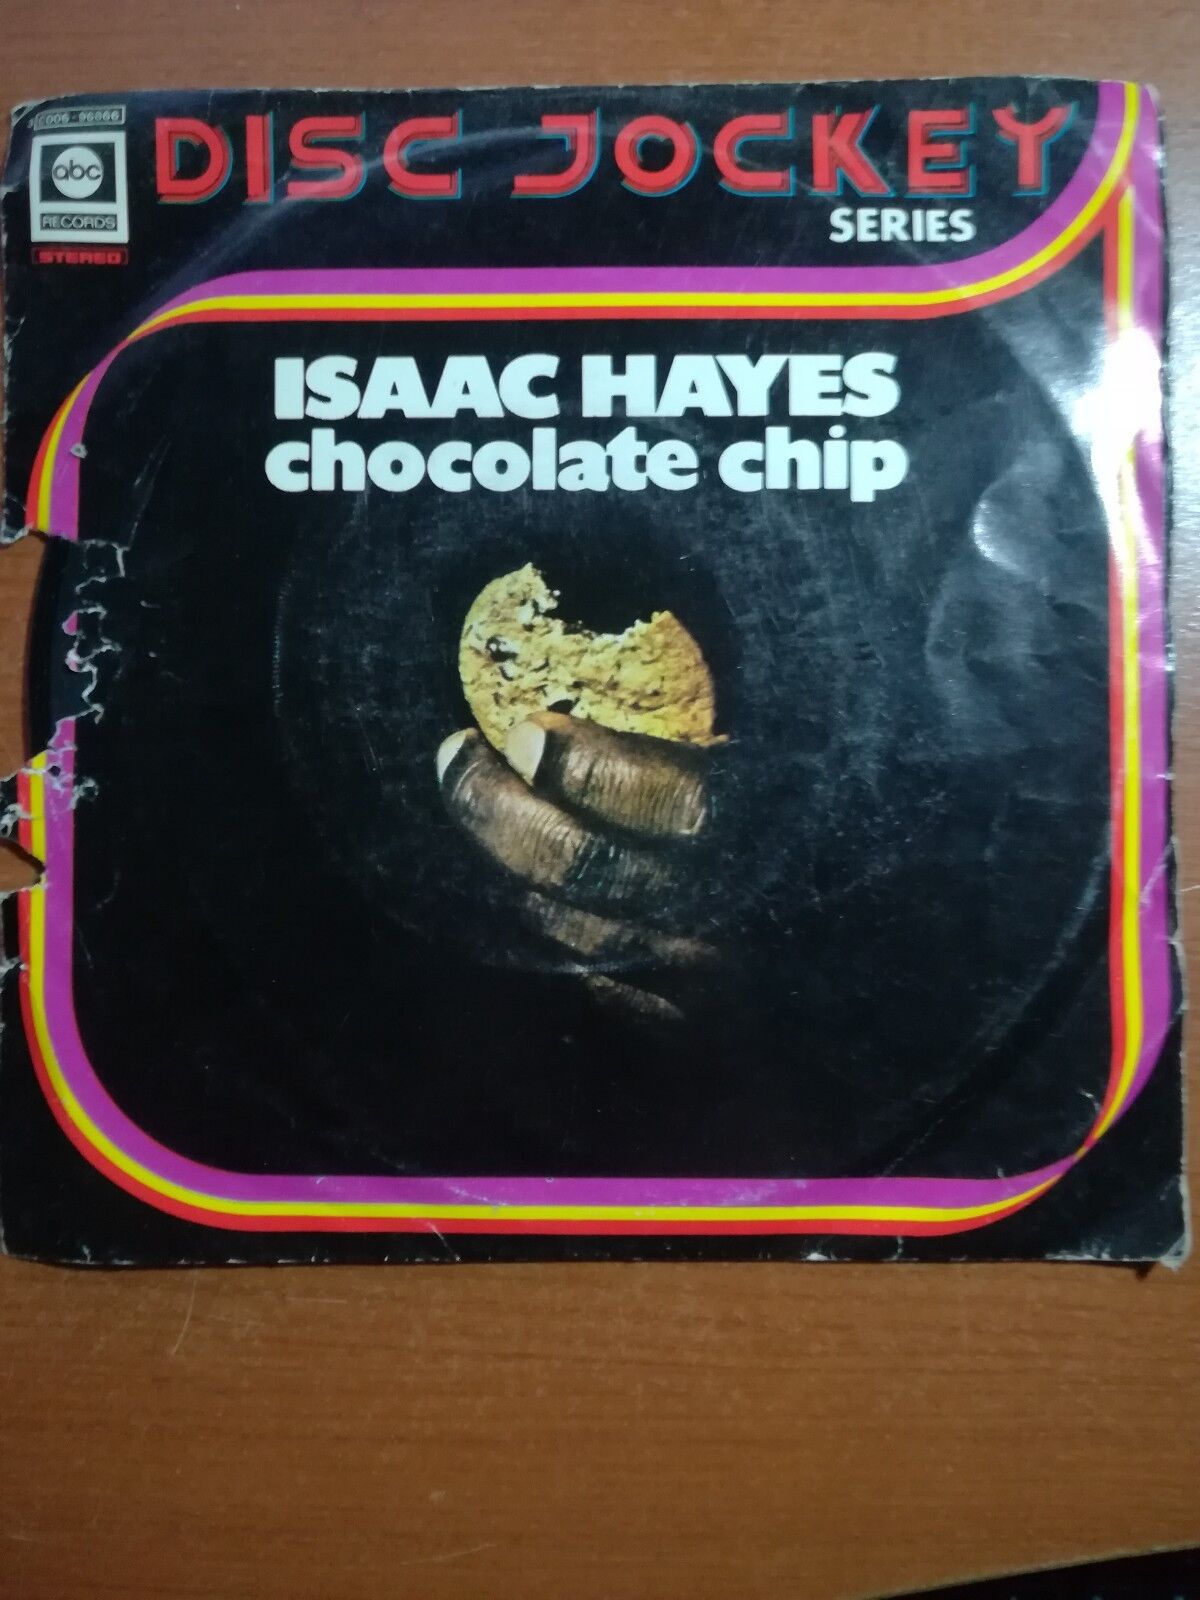 Chocolate chip - Isaac Hayes - 1975 - 45 giri - M